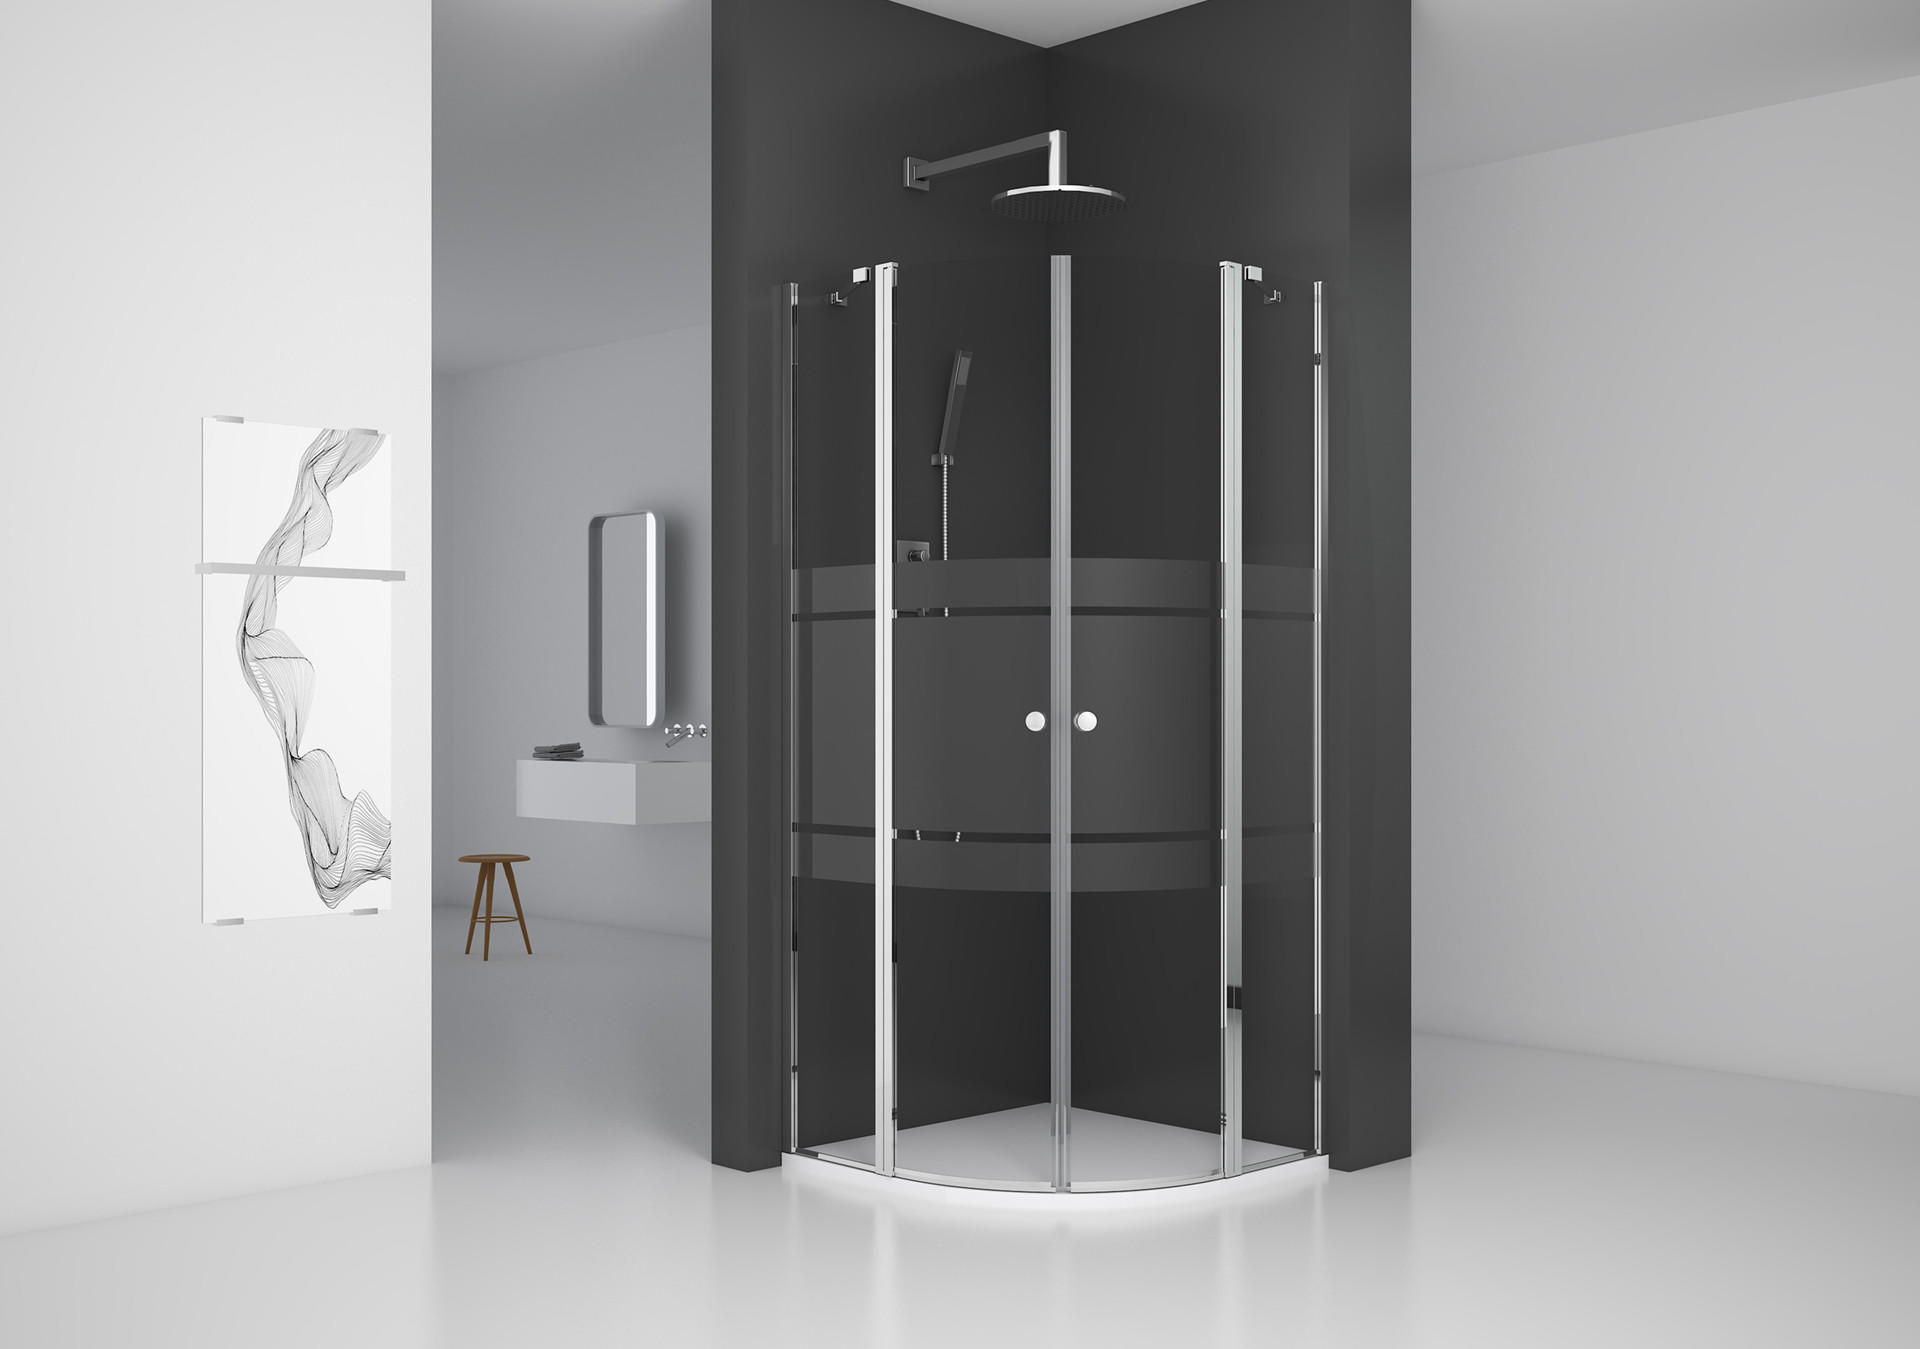 How to Design a Shower Room